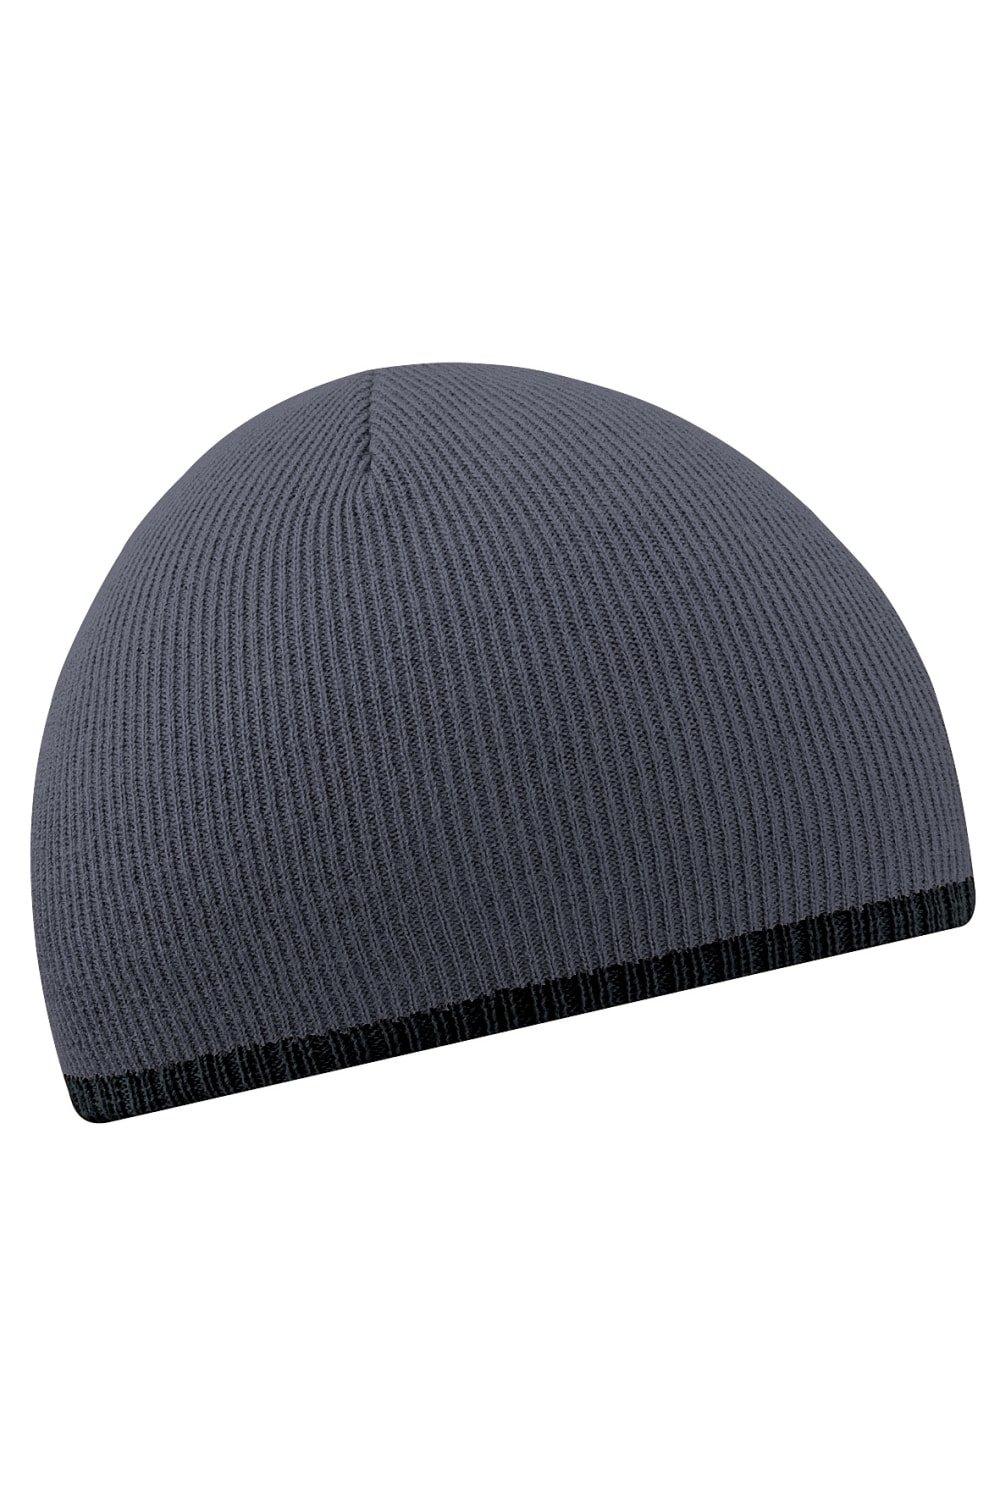 Двухцветная вязаная зимняя шапка-бини Beechfield, серый двухцветная вязаная шапка sevenext